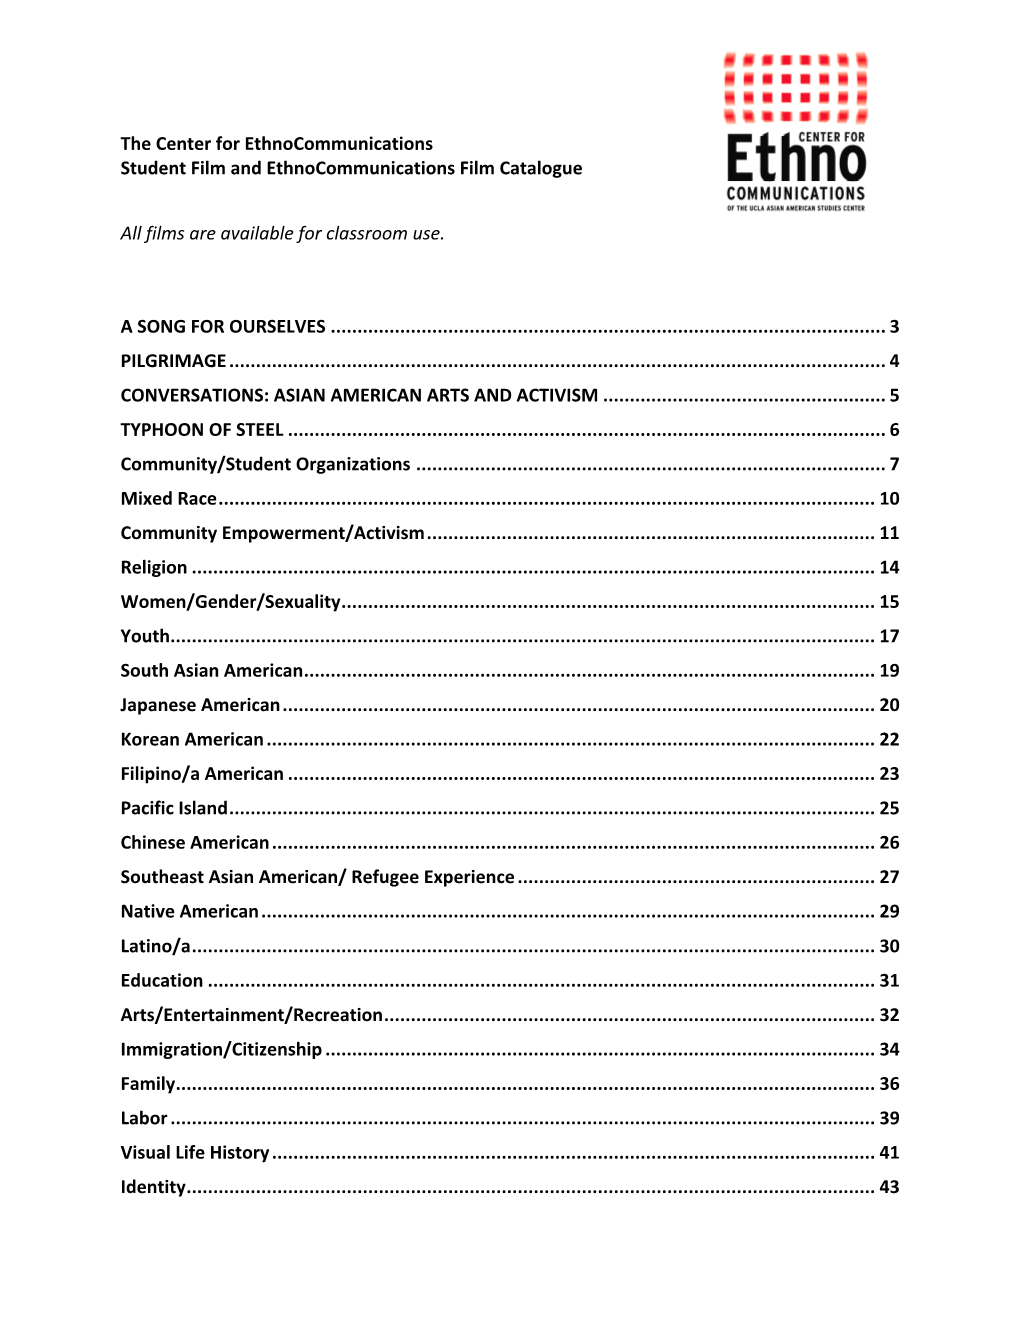 The Center for Ethnocommunications Student Film and Ethnocommunications Film Catalogue